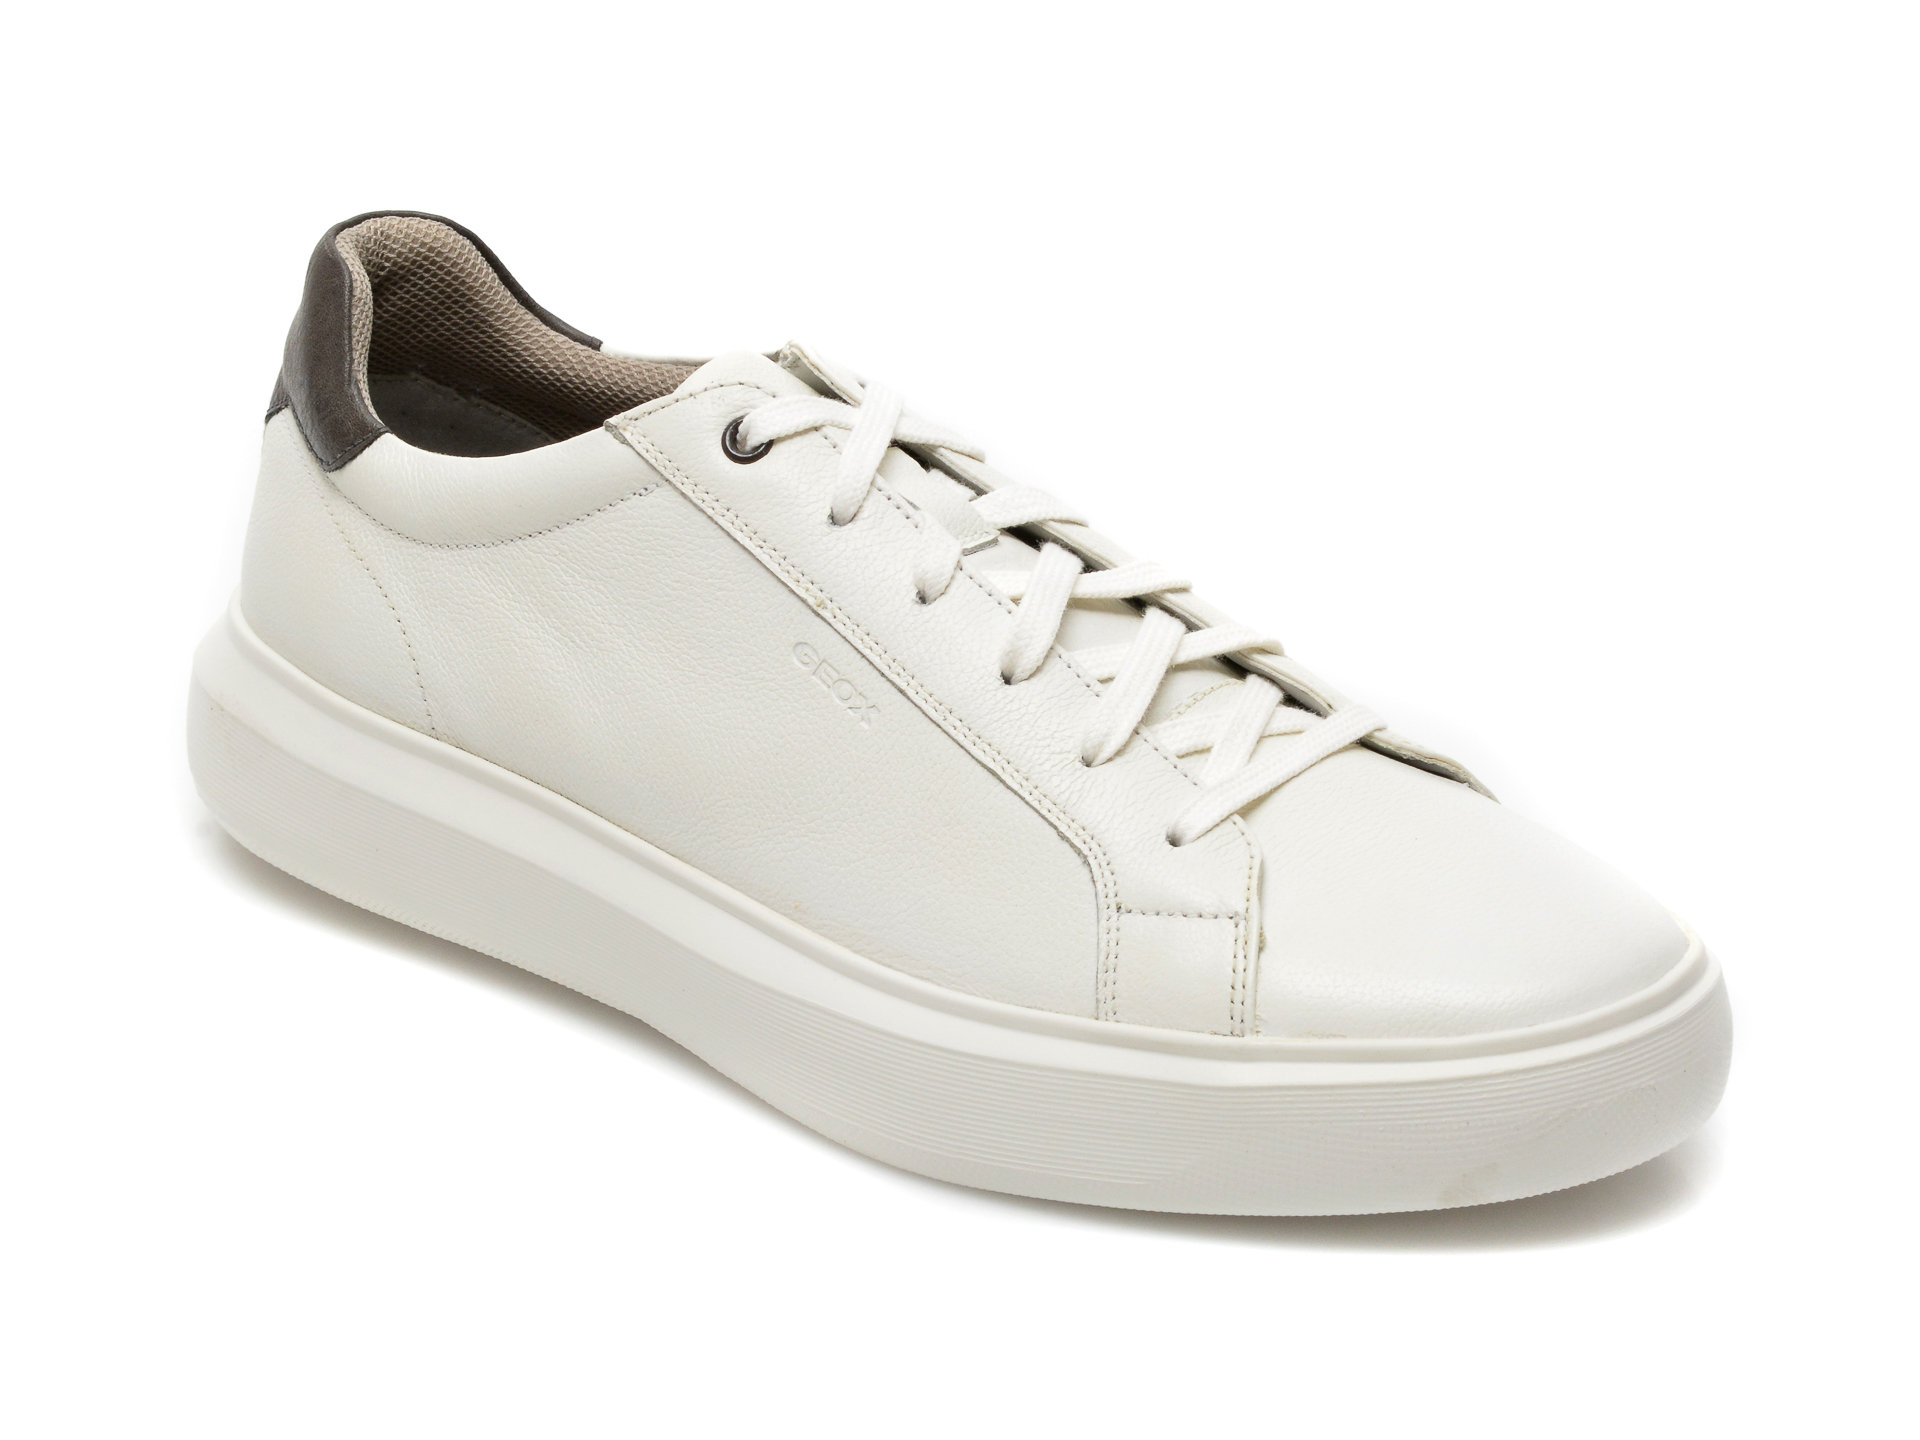 Pantofi GEOX albi, U155WB, din piele naturala Geox Geox